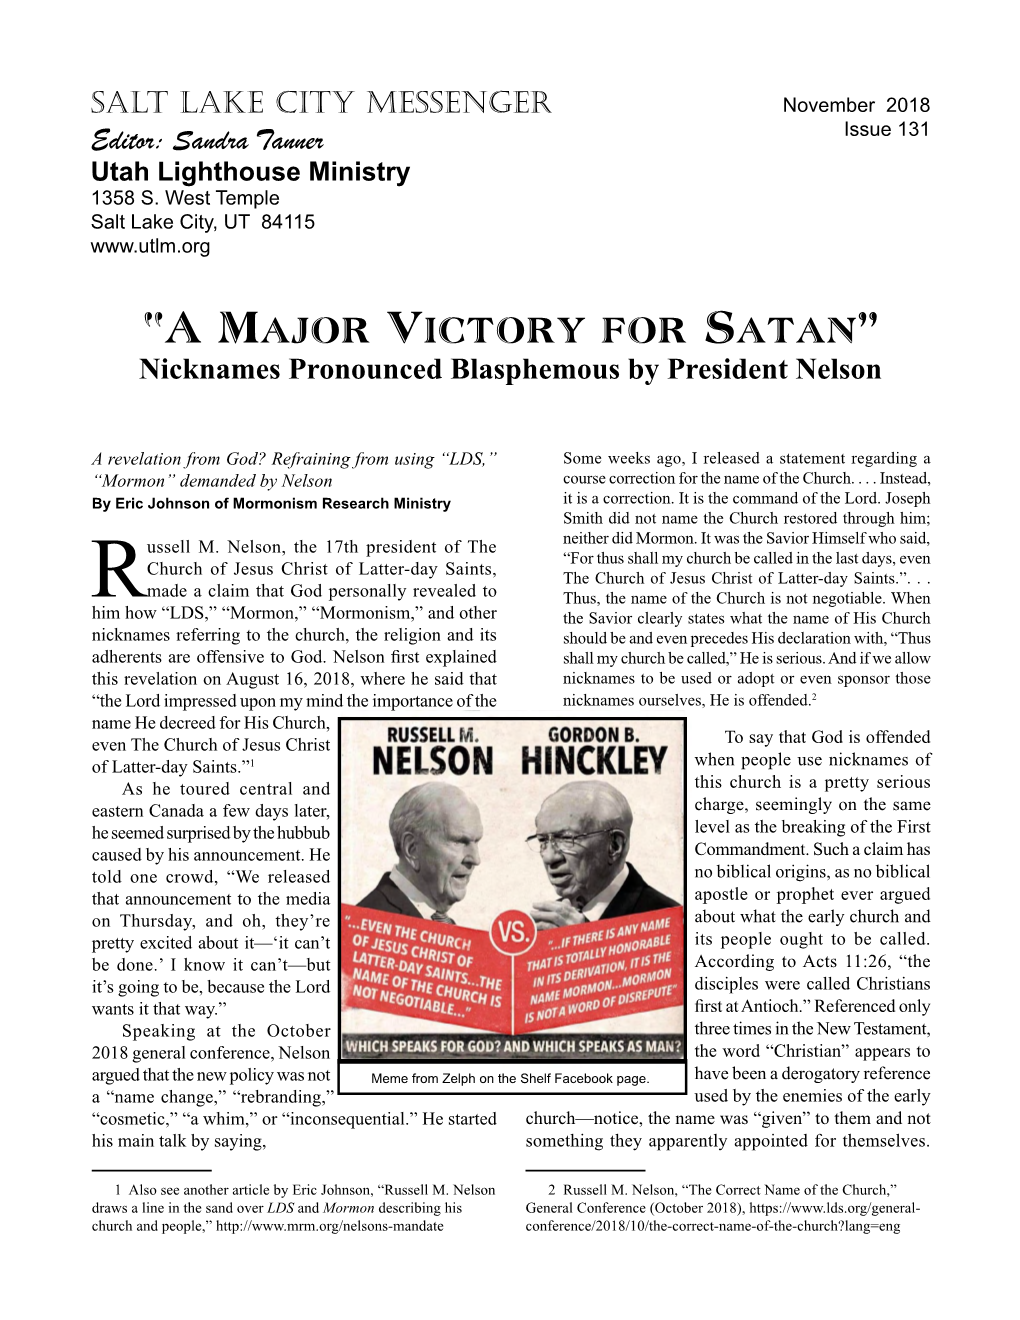 131 Salt Lake City Messenger: "A Major Victory for Satan"